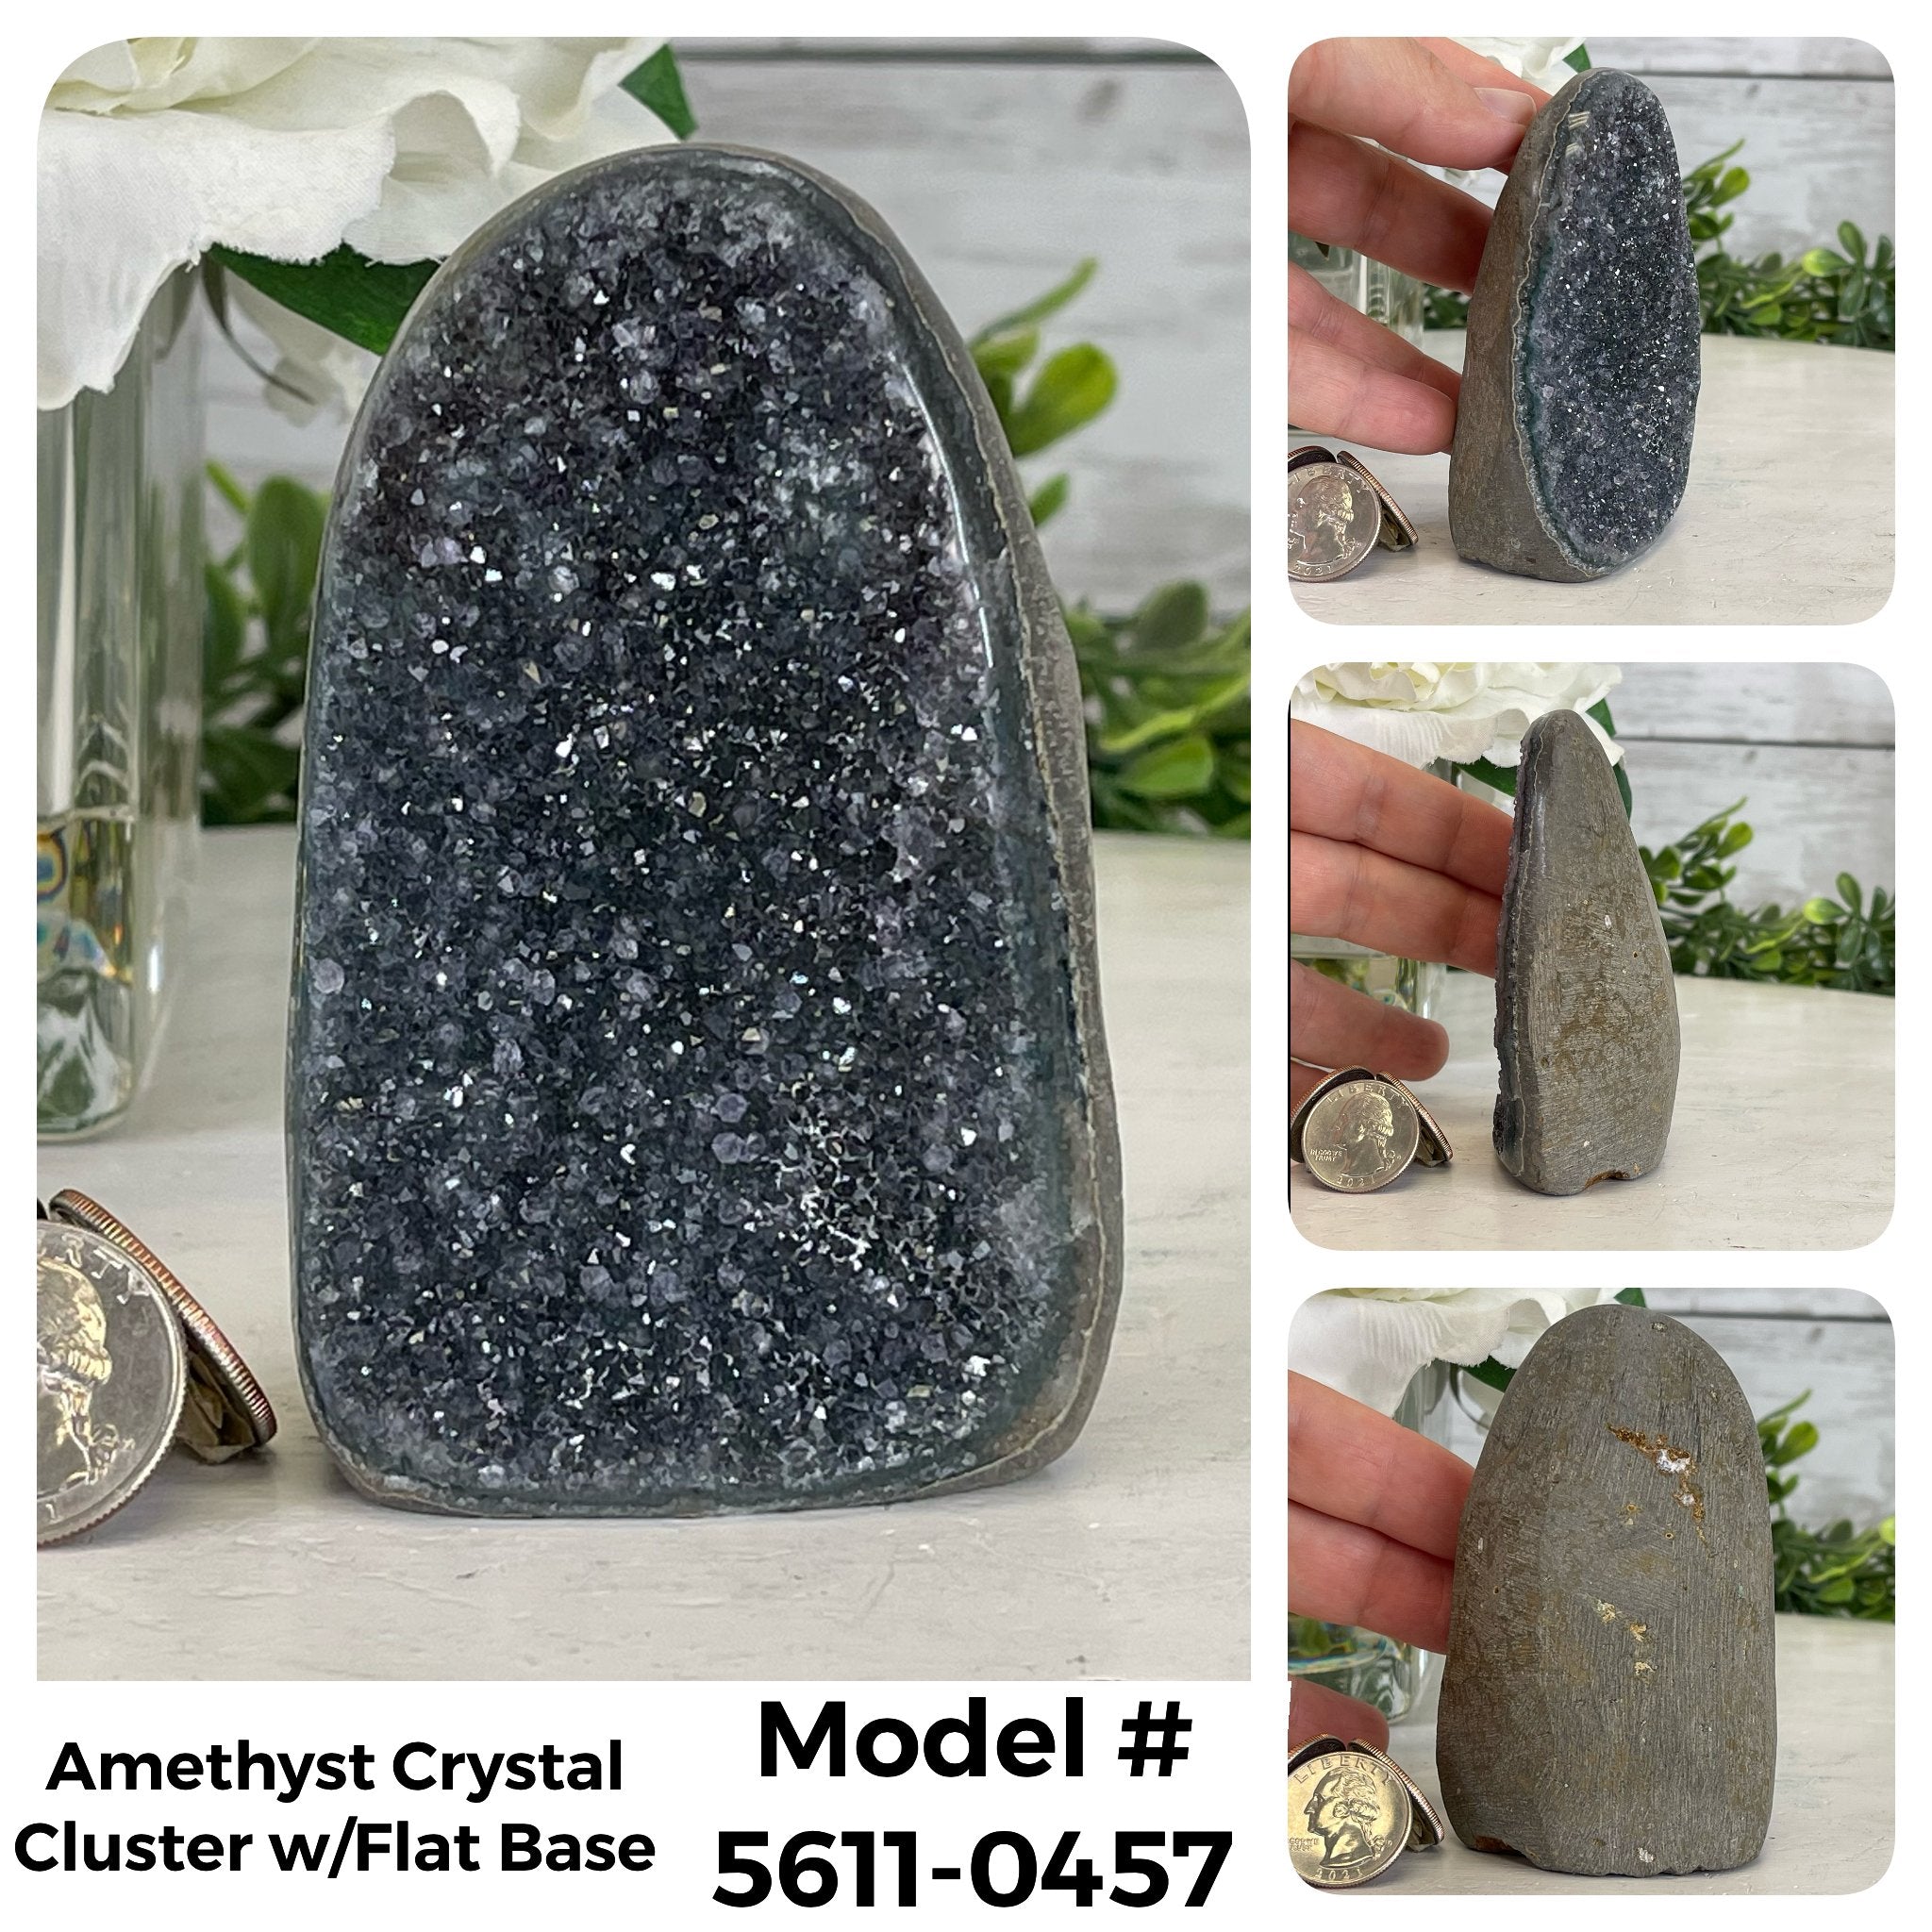 Small Super Quality Amethyst Crystal Cluster w/ flat base, Various Options #5611SQ - Brazil GemsBrazil GemsSmall Super Quality Amethyst Crystal Cluster w/ flat base, Various Options #5611SQSmall Clusters with Flat Bases5611-0457